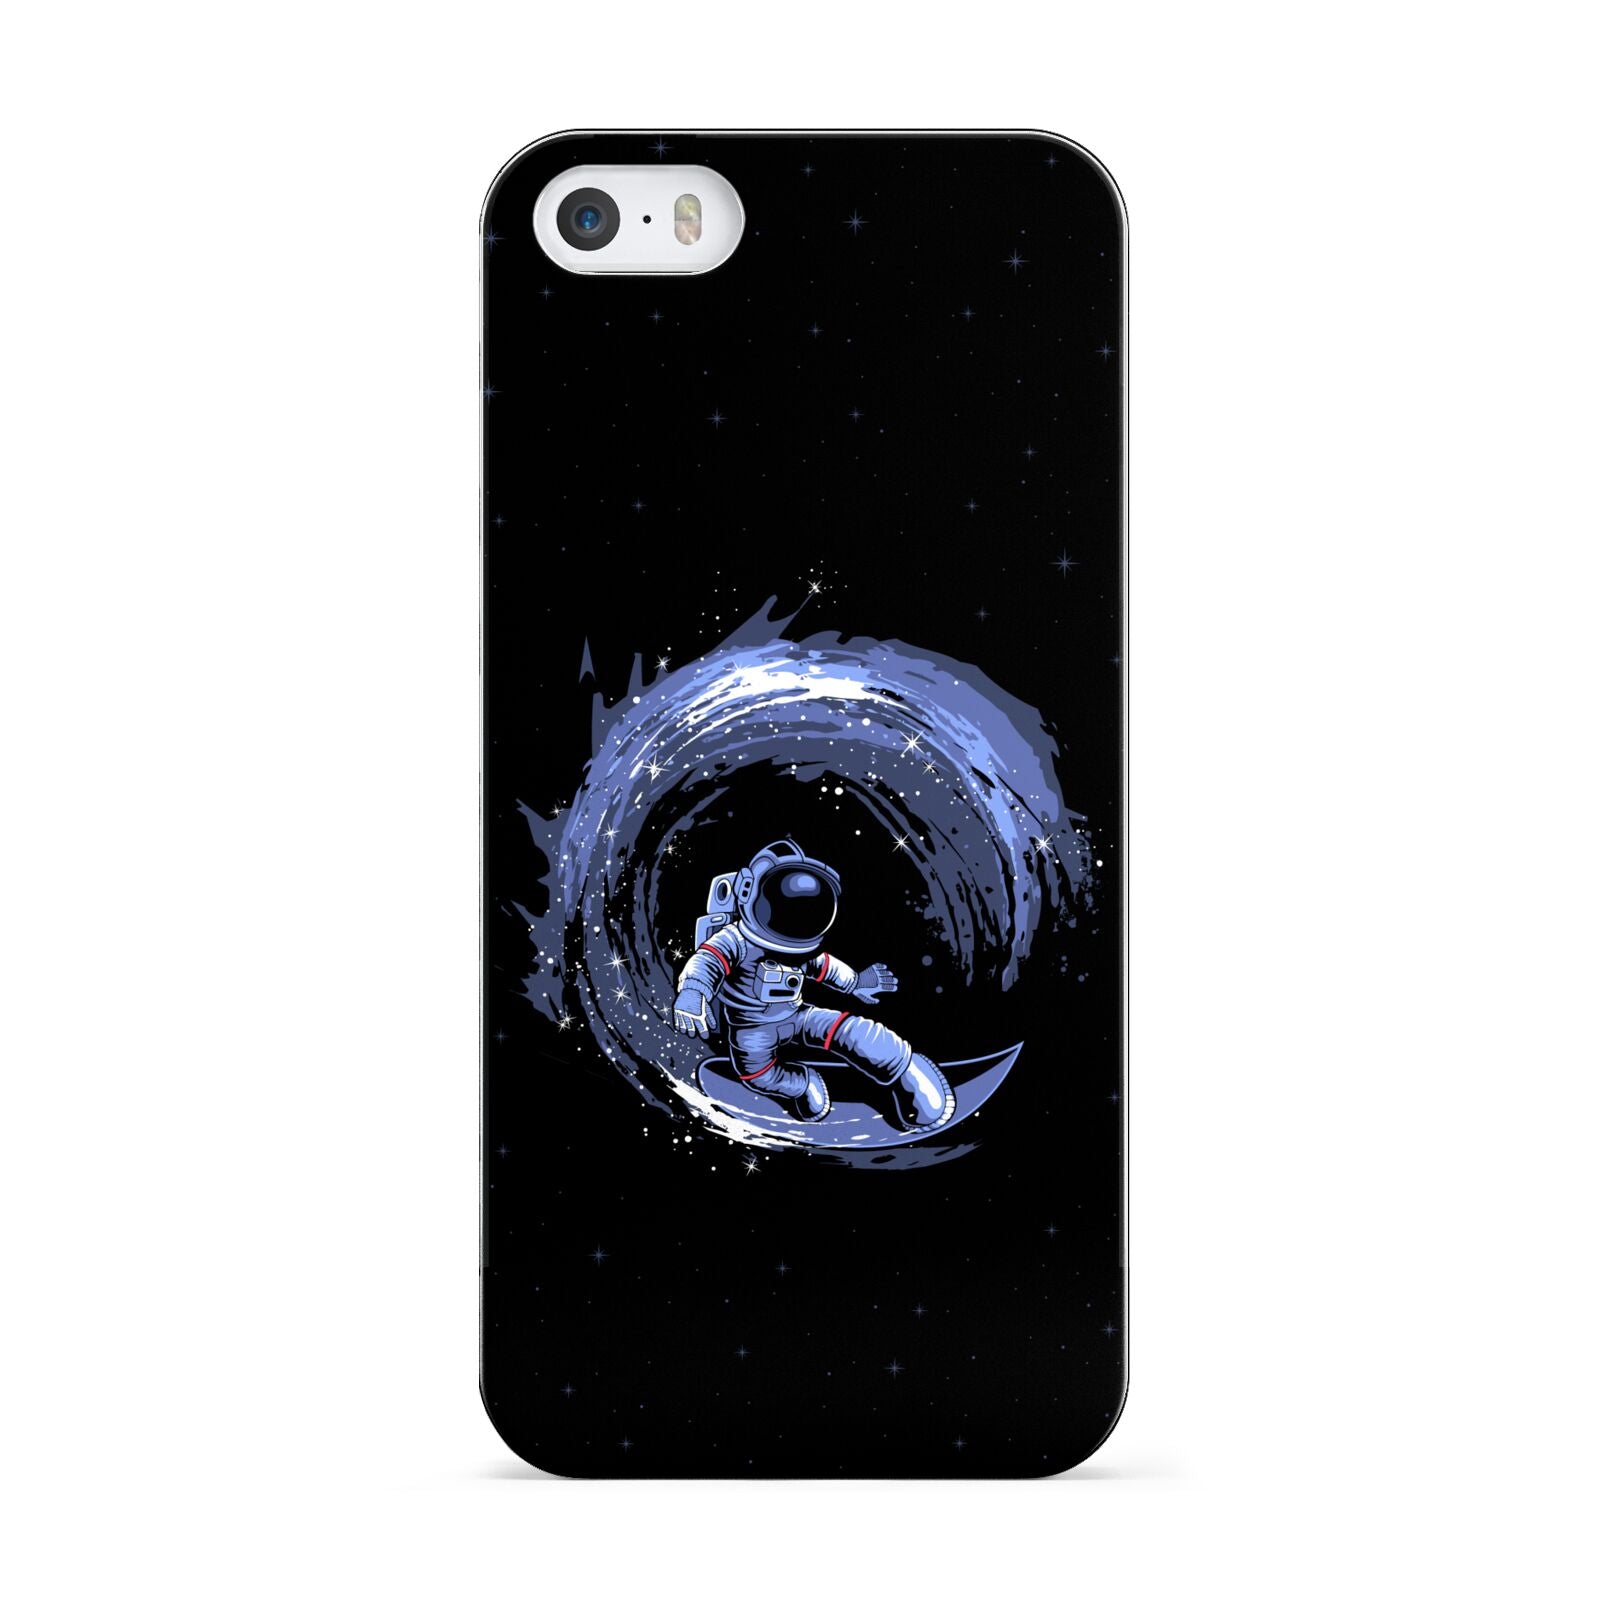 Surfing Astronaut Apple iPhone 5 Case